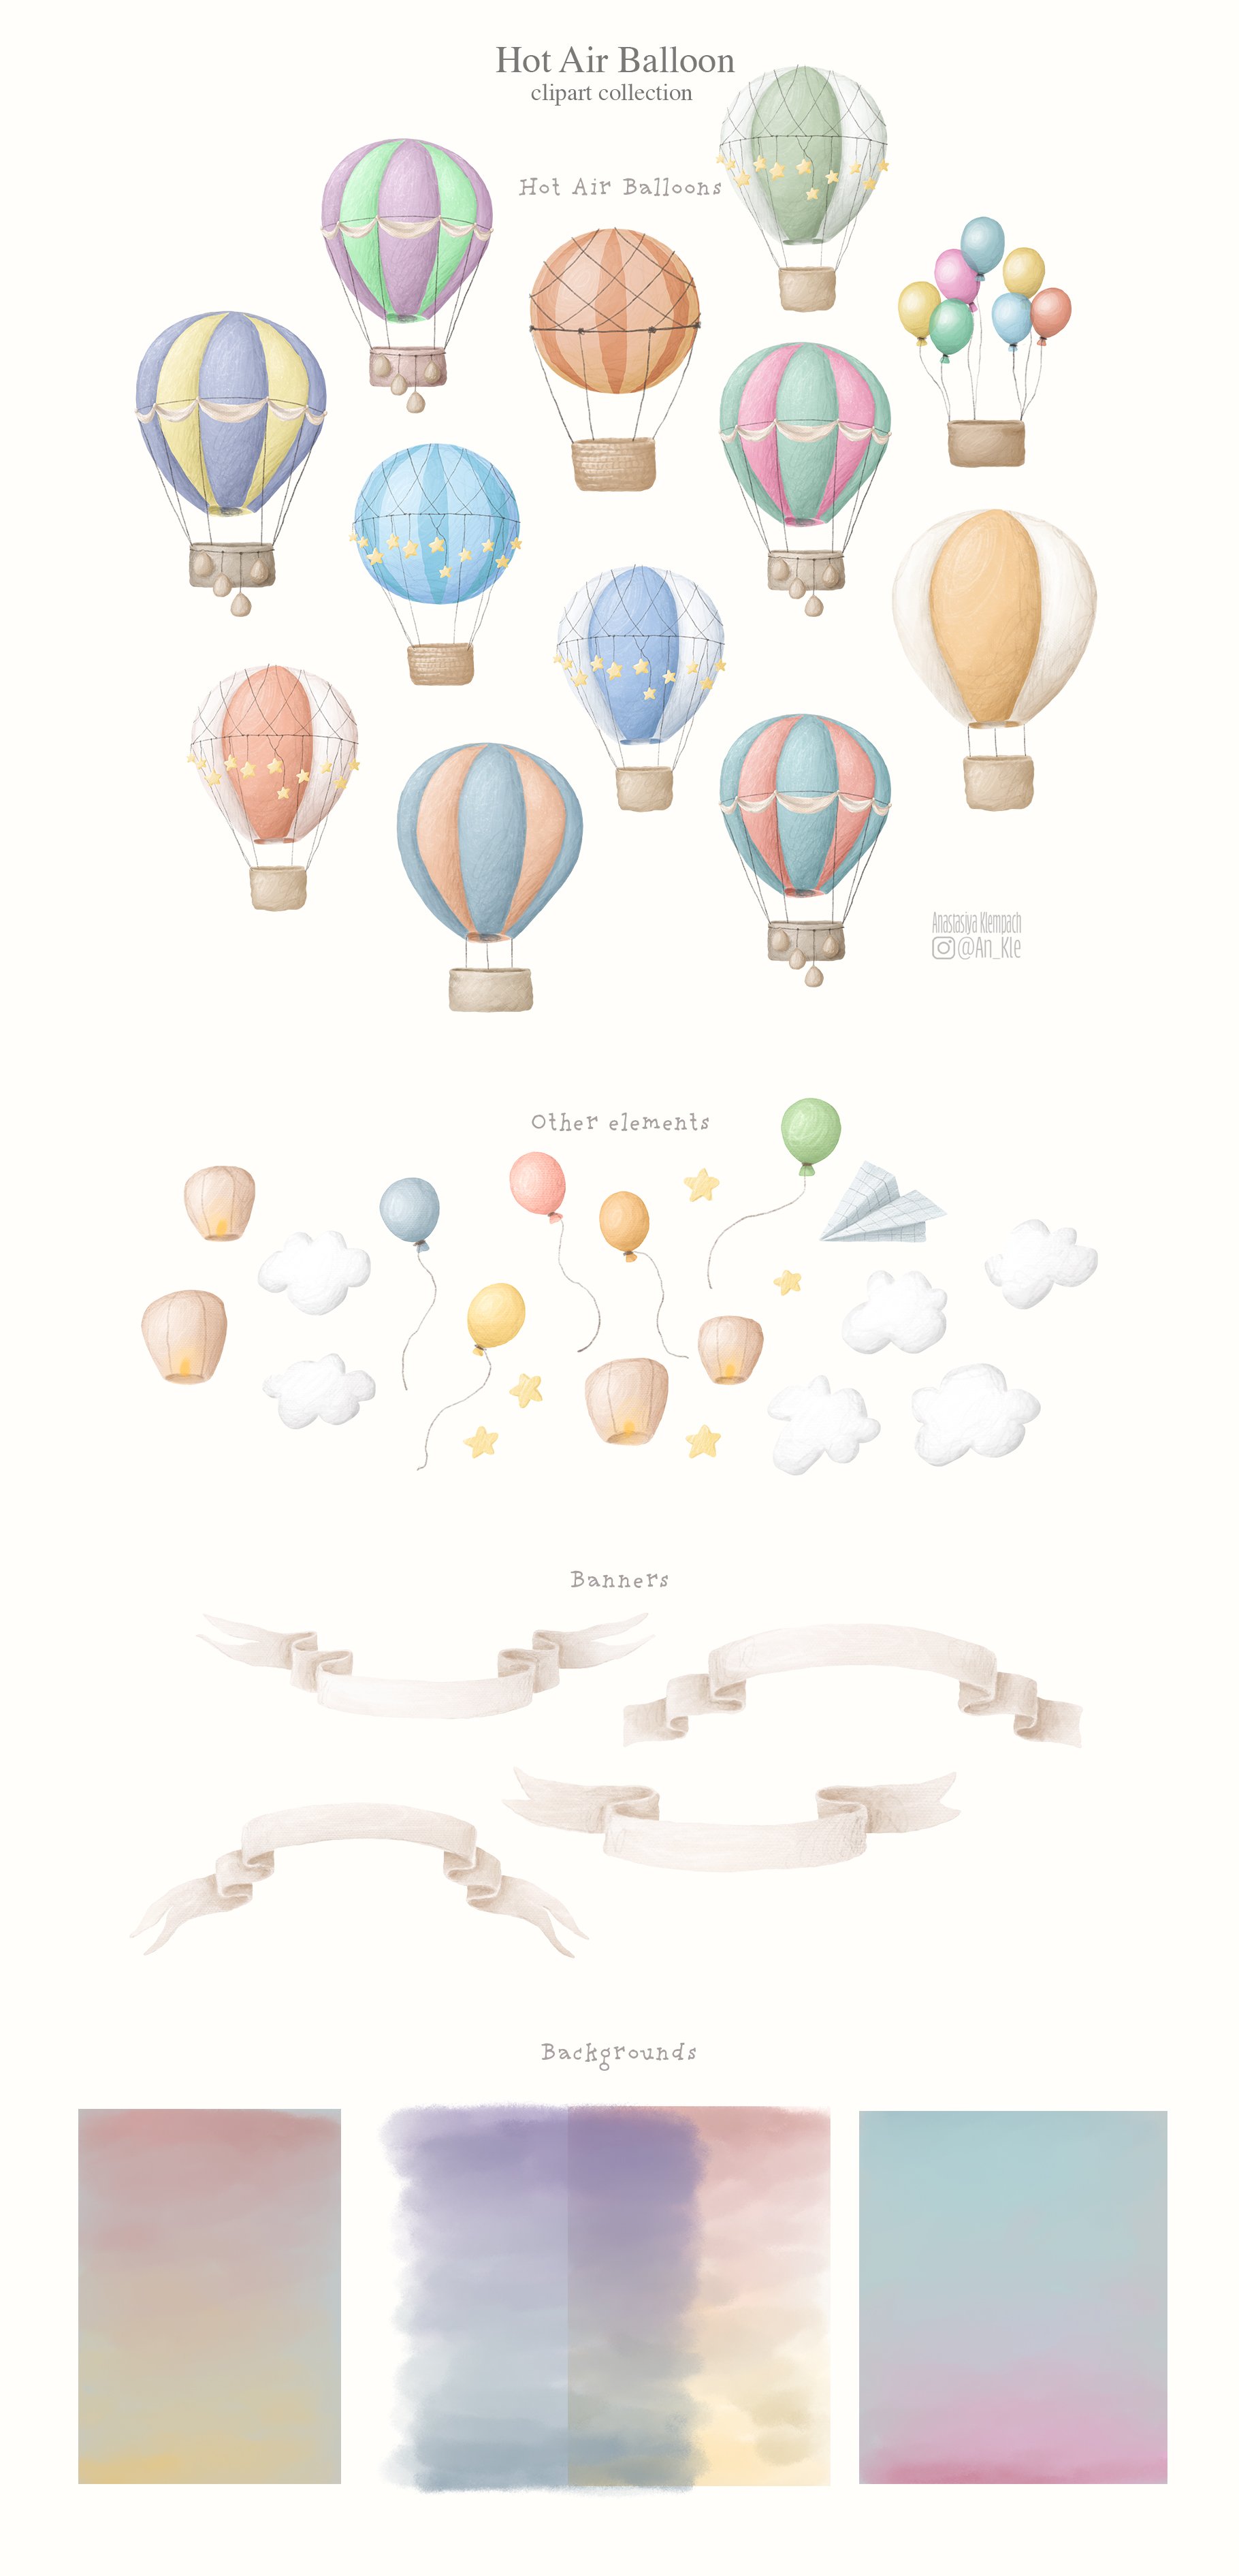 Hot air balloon baby illustrations.